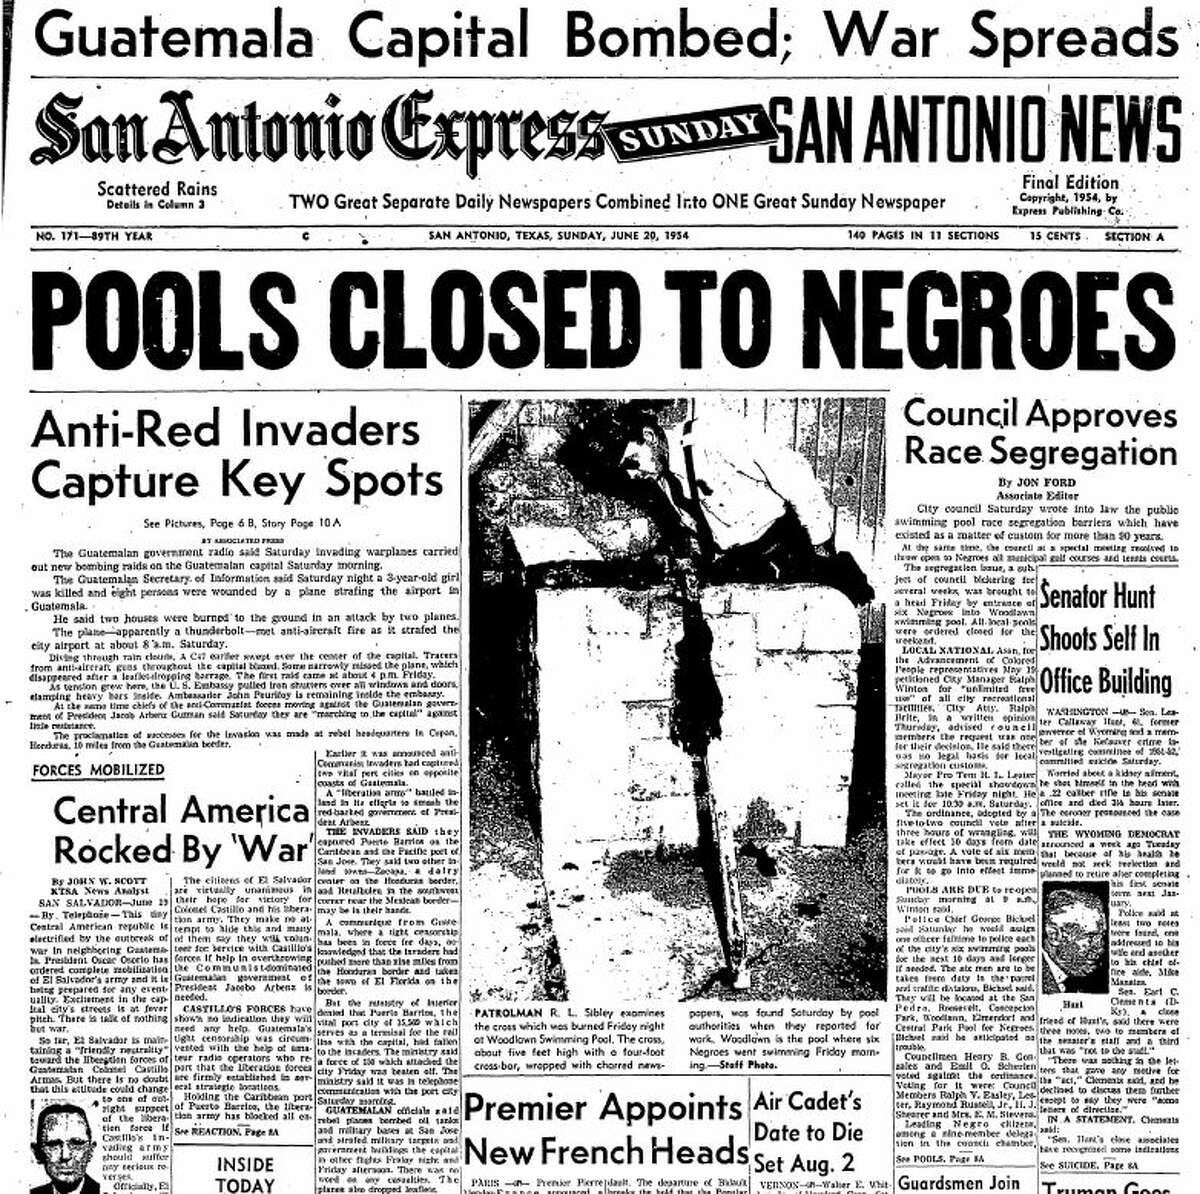 Black people banned from San Antonio pools on 1954